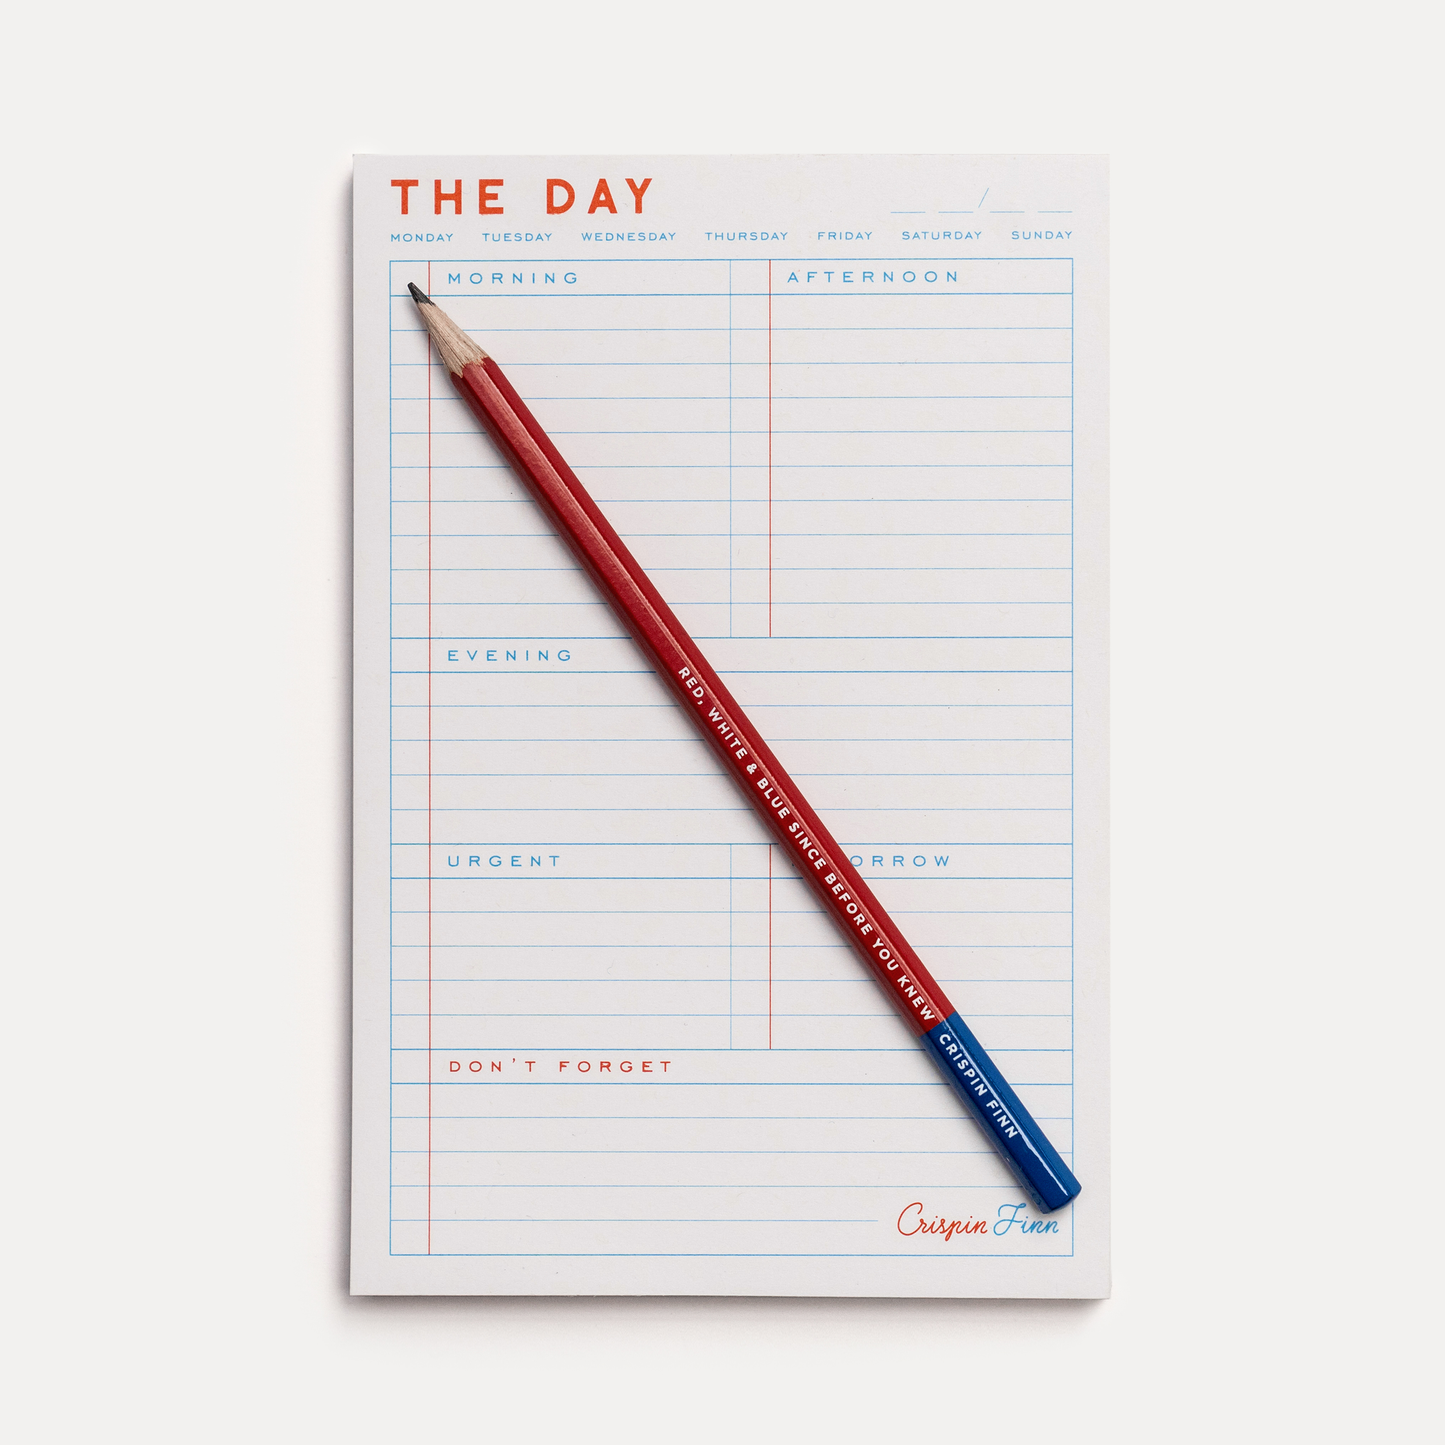 Crispin Finn - The Day Notepad